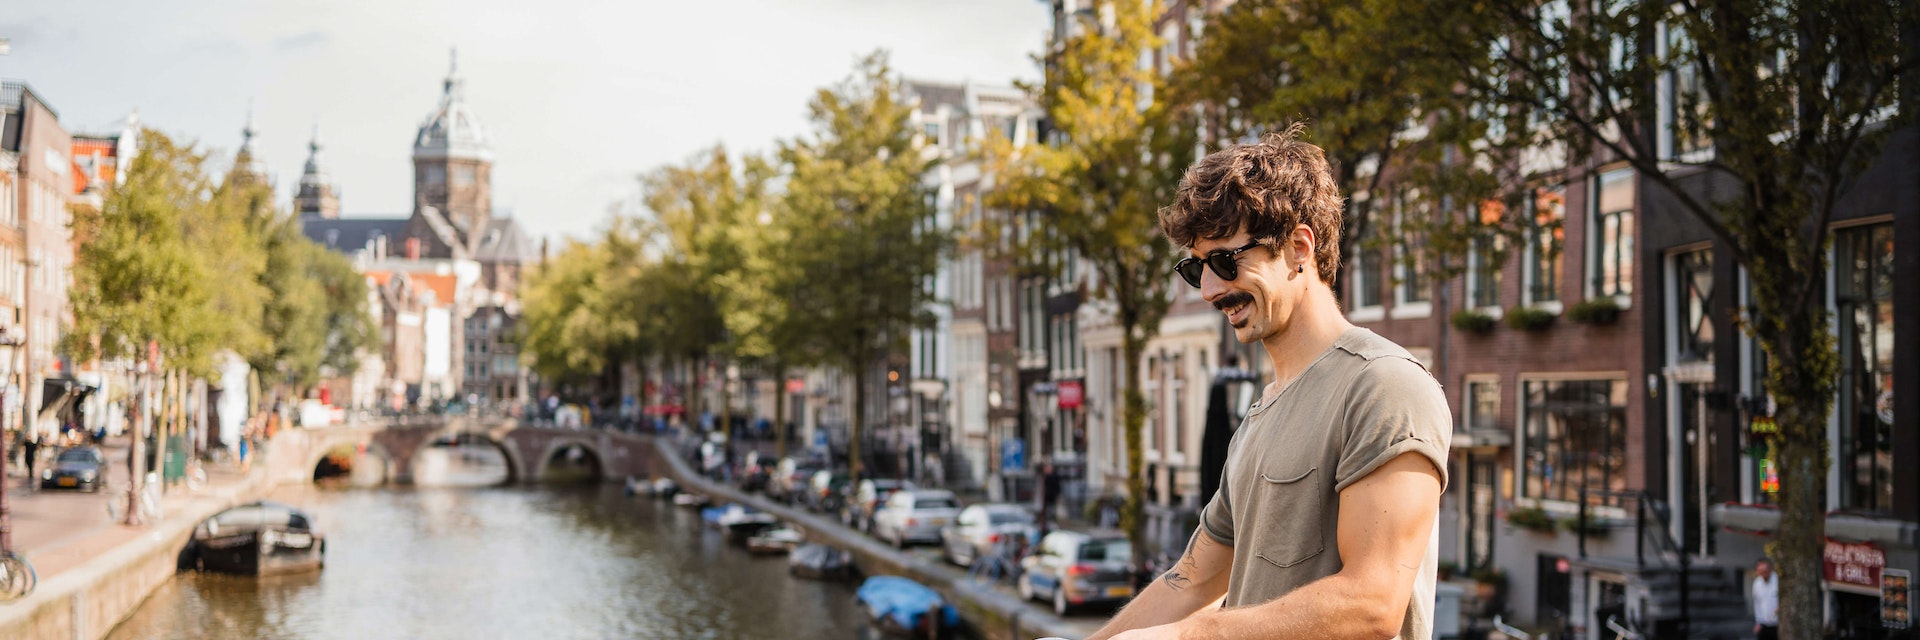 Man riding bike through Amsterdam.